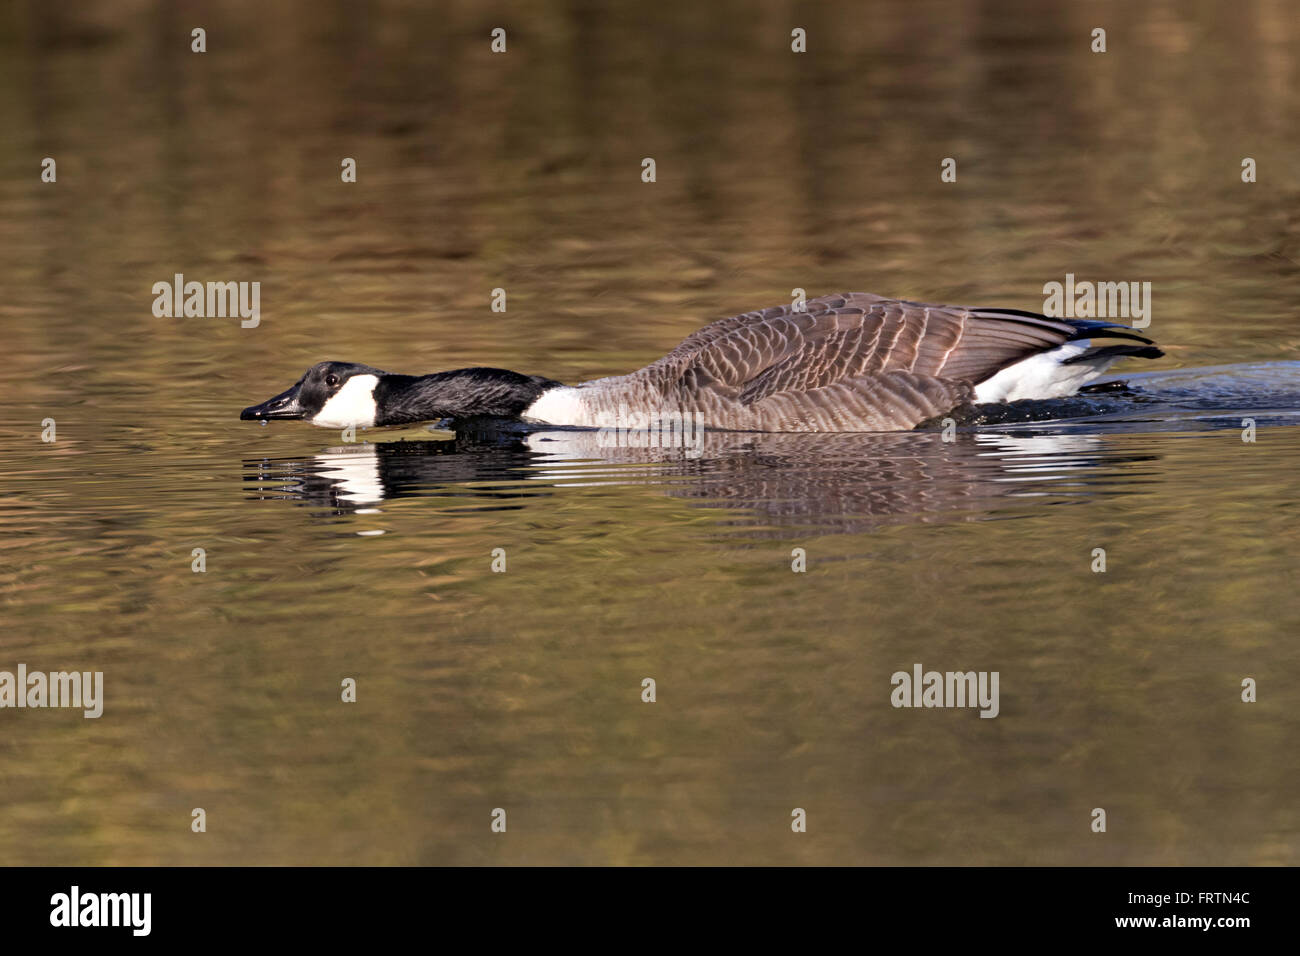 Canada goose (Branta canadensis) swimming, Hamburg, Germany, Europe Stock Photo